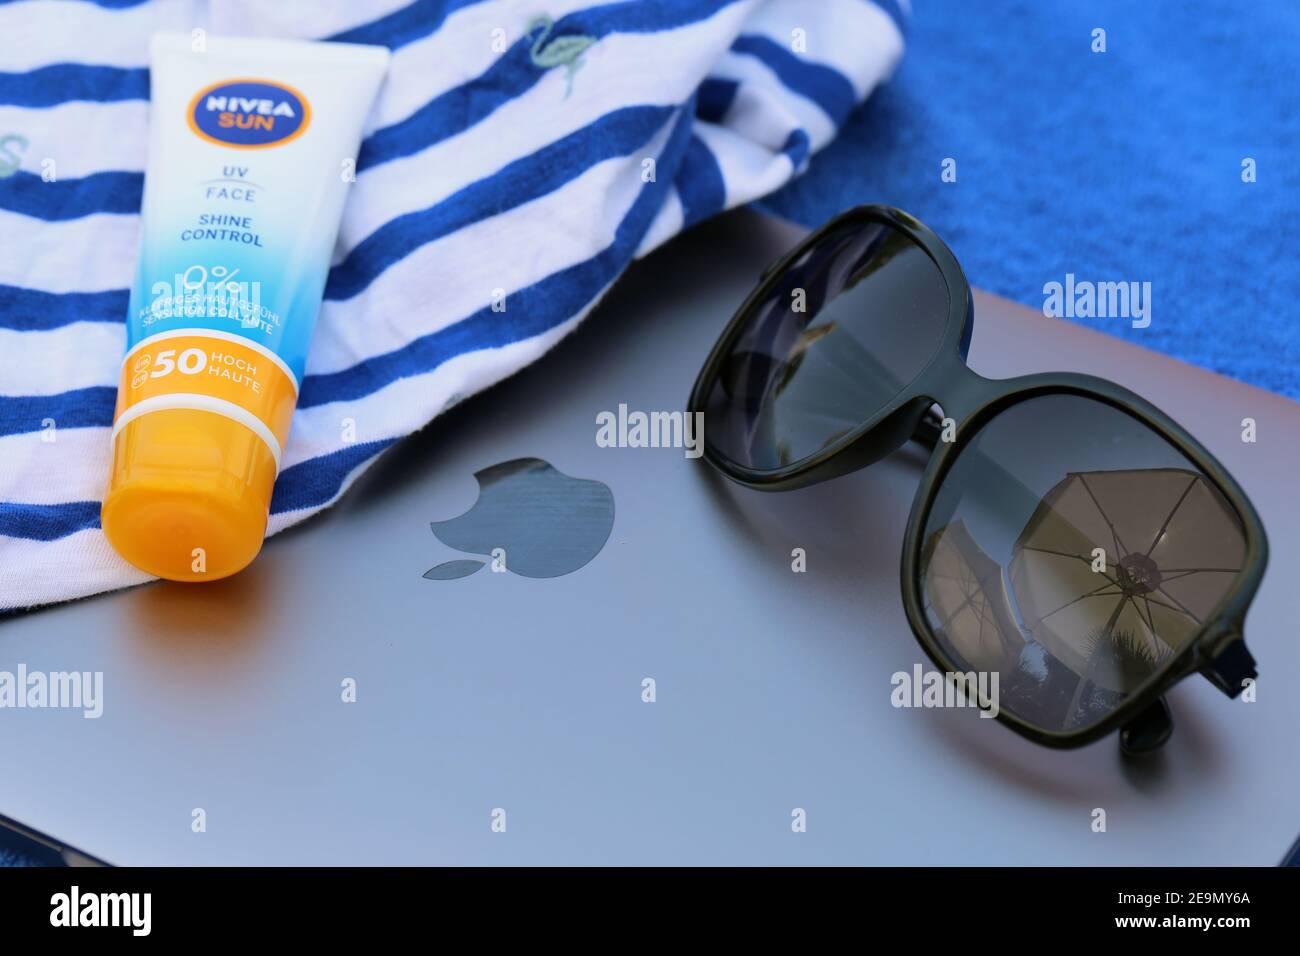 Sun block bottle, Dolce and Gabbana sunglasses, MacBook, beach shirt and  beach towel in a closeup photo. White, blue and orange colors. Cyprus Aug  19 Stock Photo - Alamy